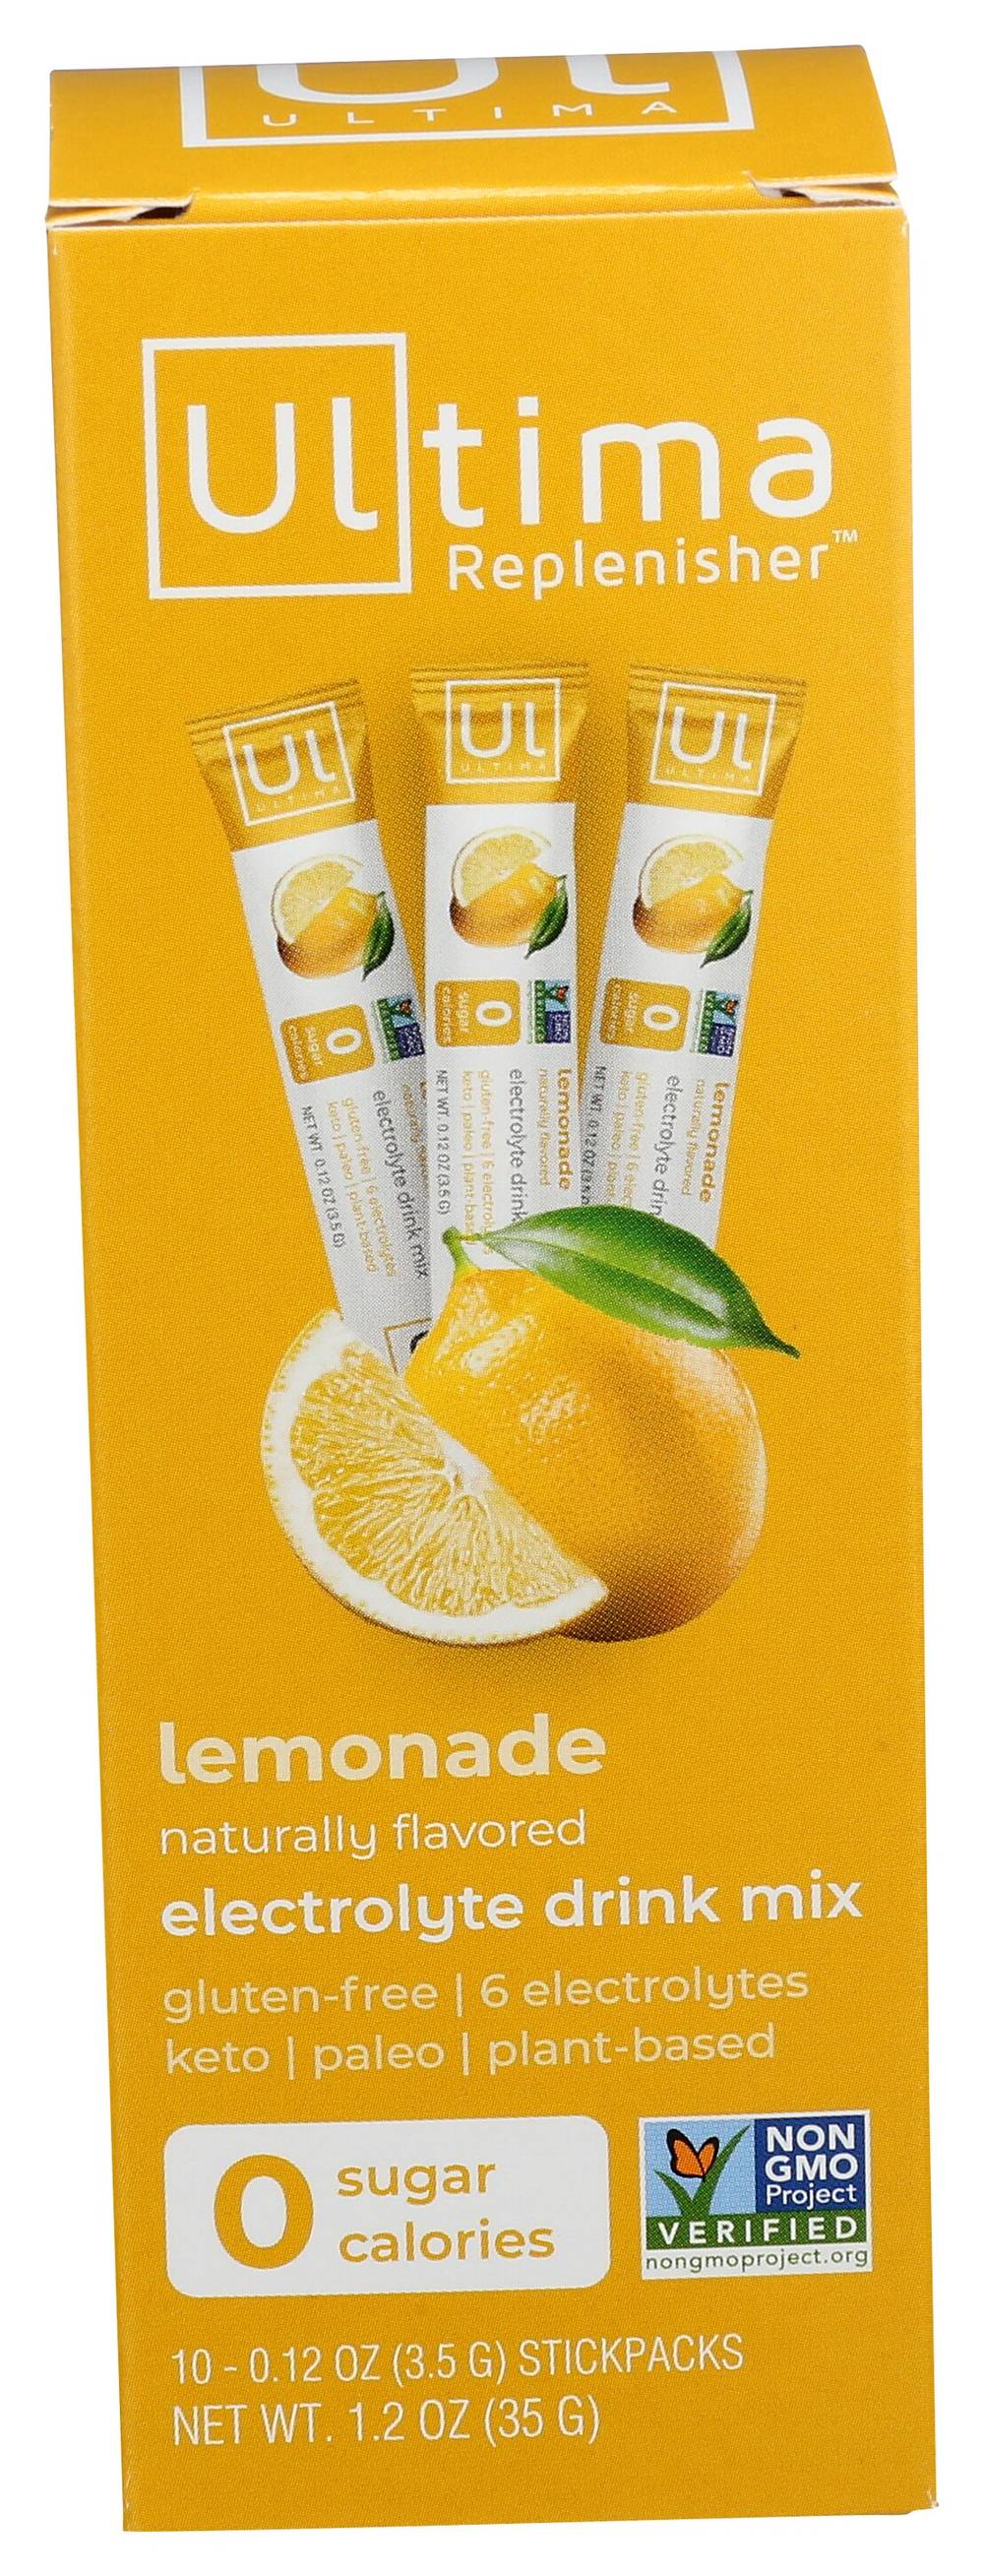 Ultima Replenisher Lemonade Electrolyte Power (1.2 oz)